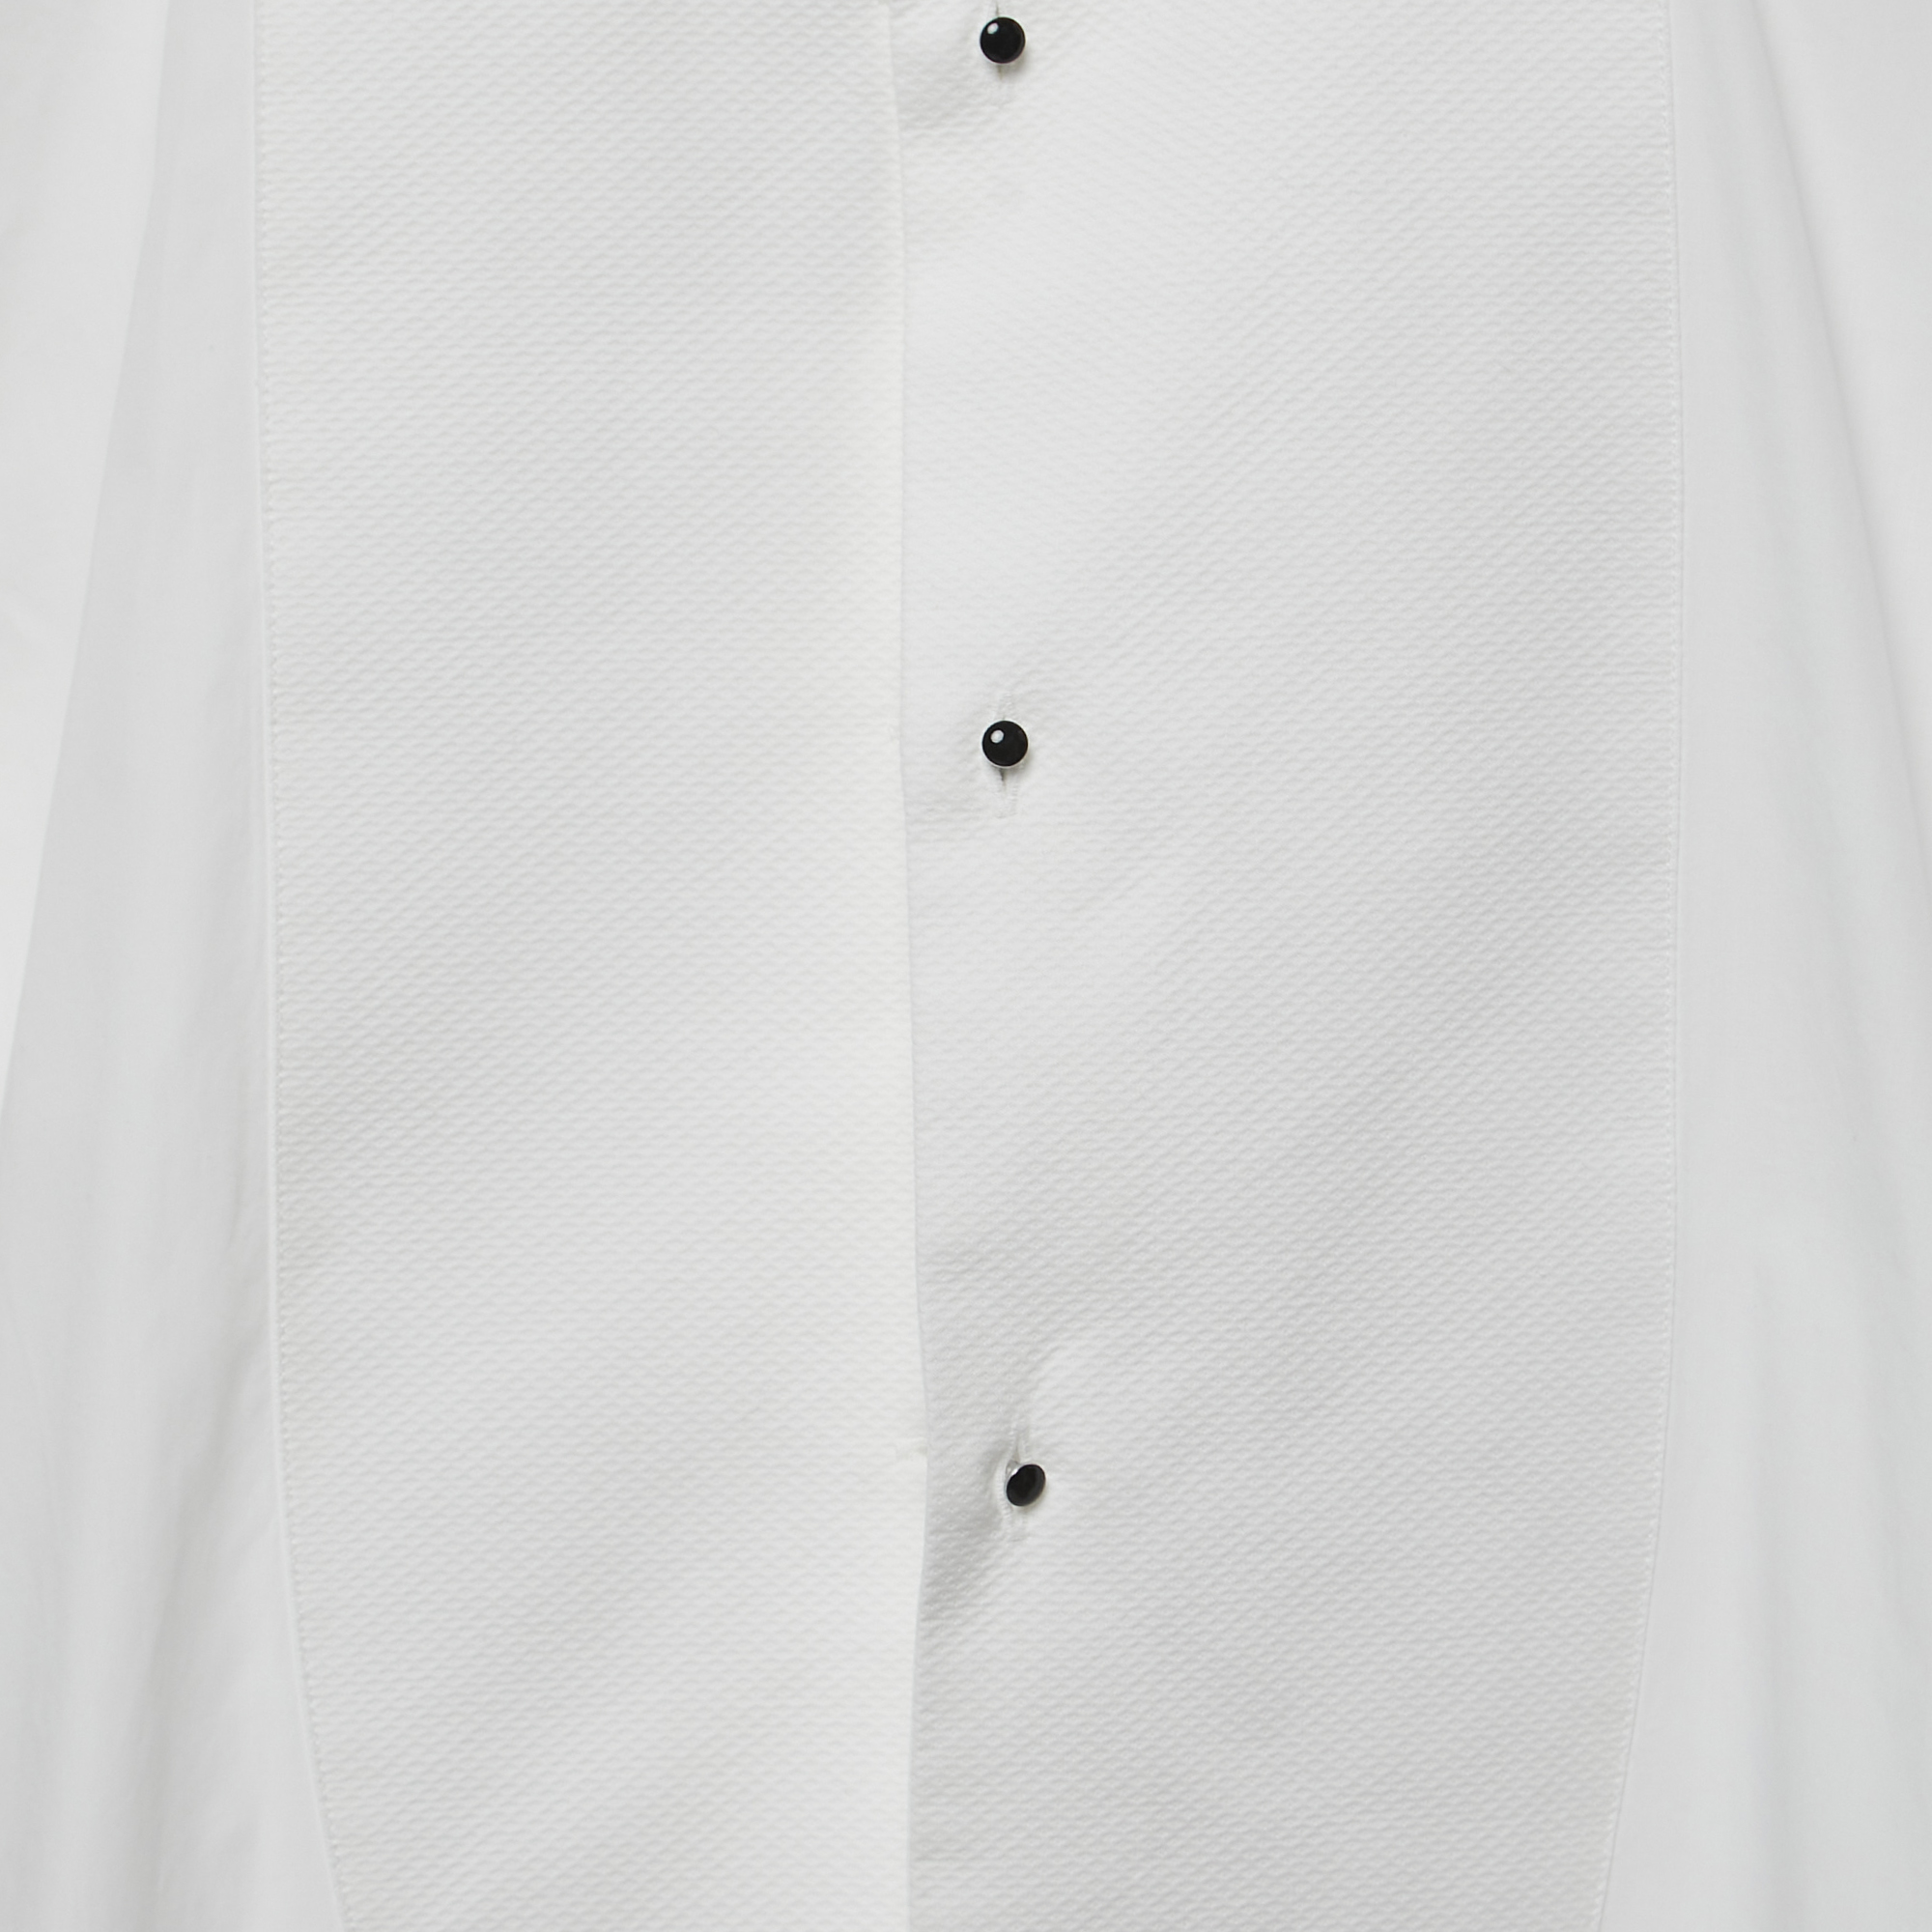 Dolce & Gabbana Gold White Cotton Button Front Shirt XS